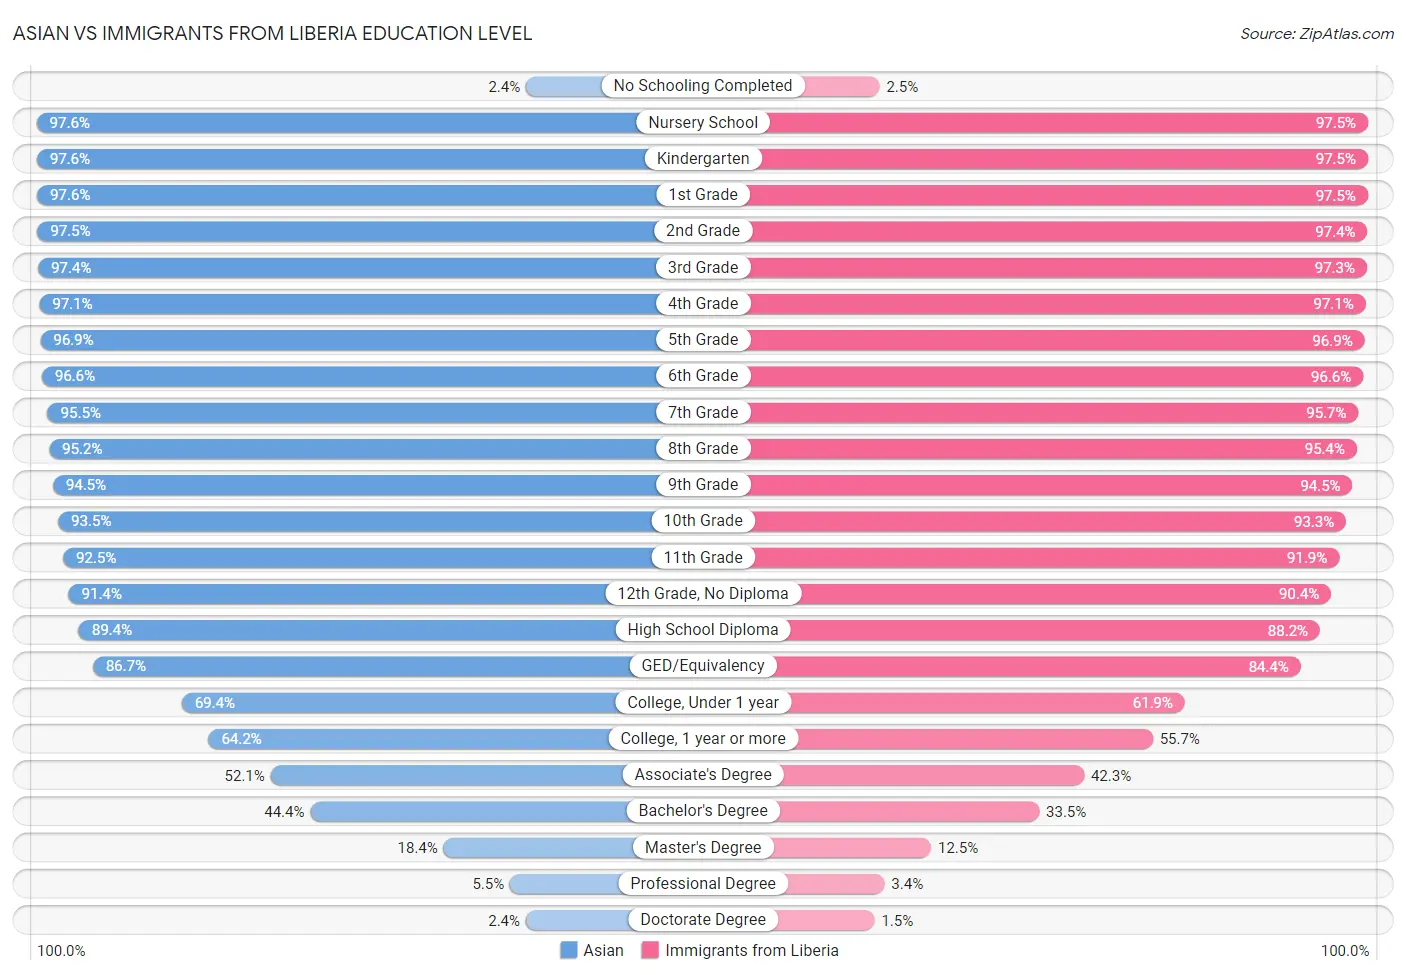 Asian vs Immigrants from Liberia Education Level